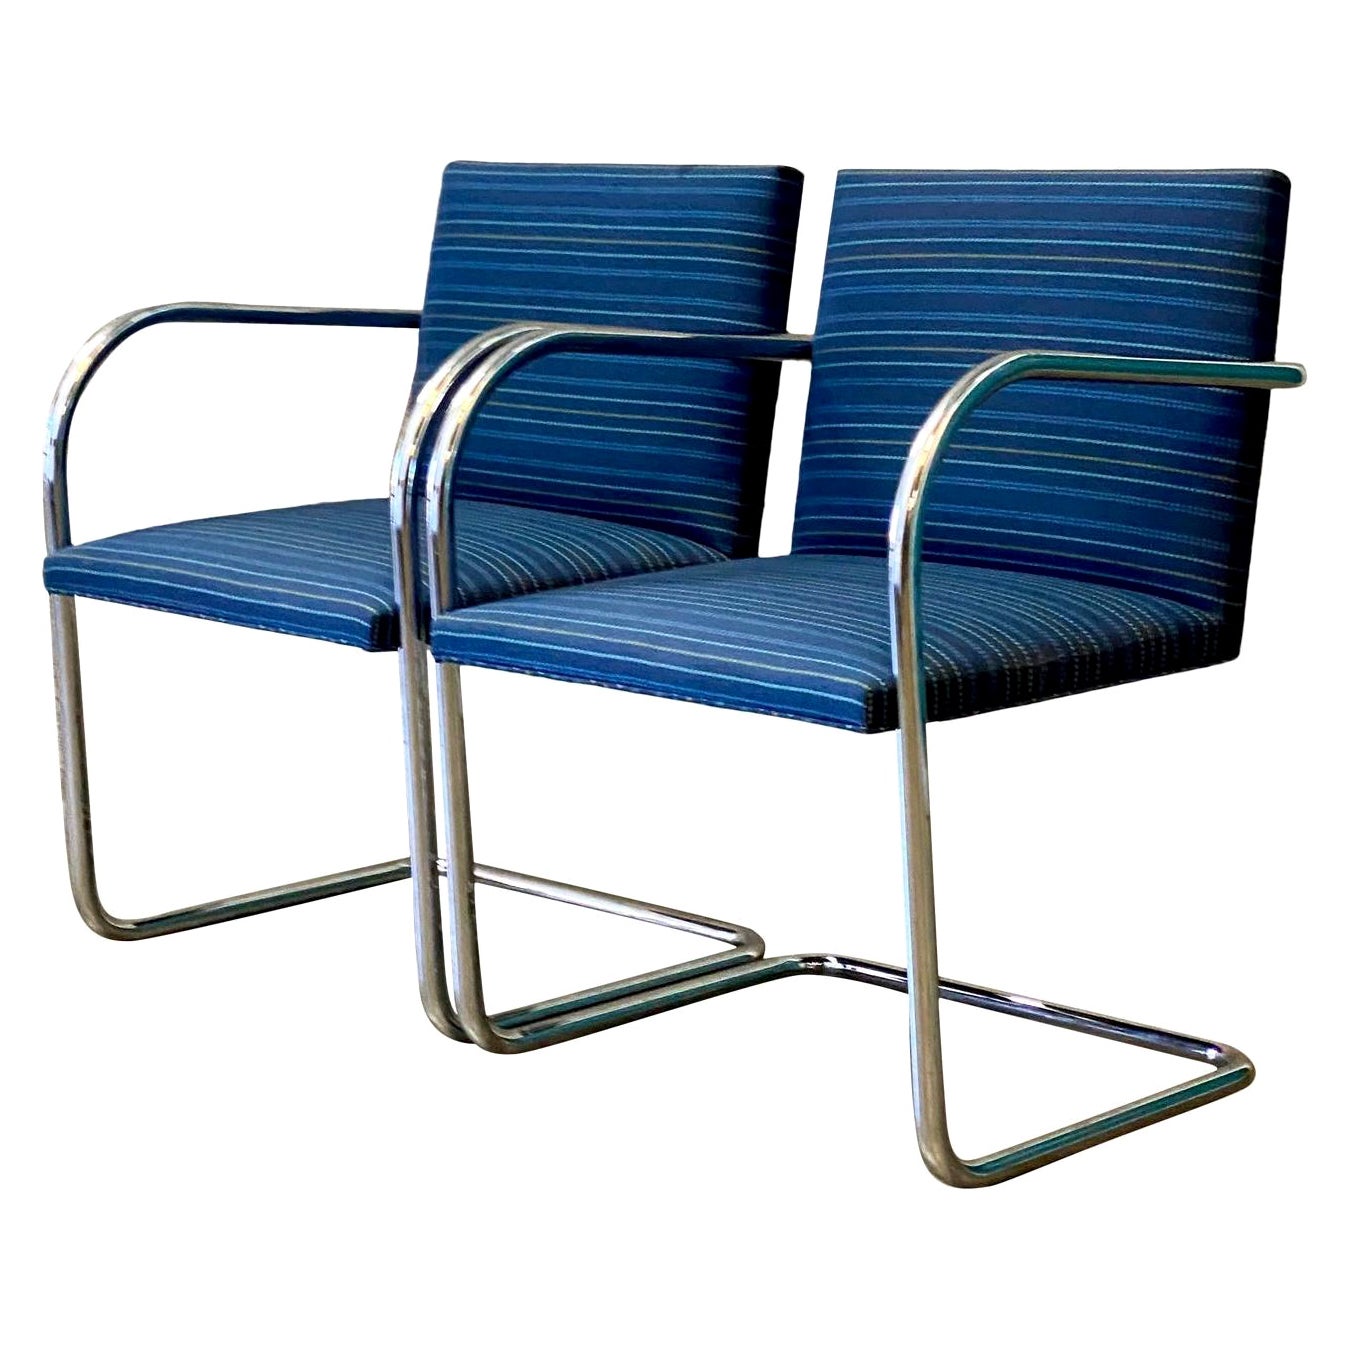 Vintage Midcentury Knoll Tubular BRNO Chairs, a Pair For Sale